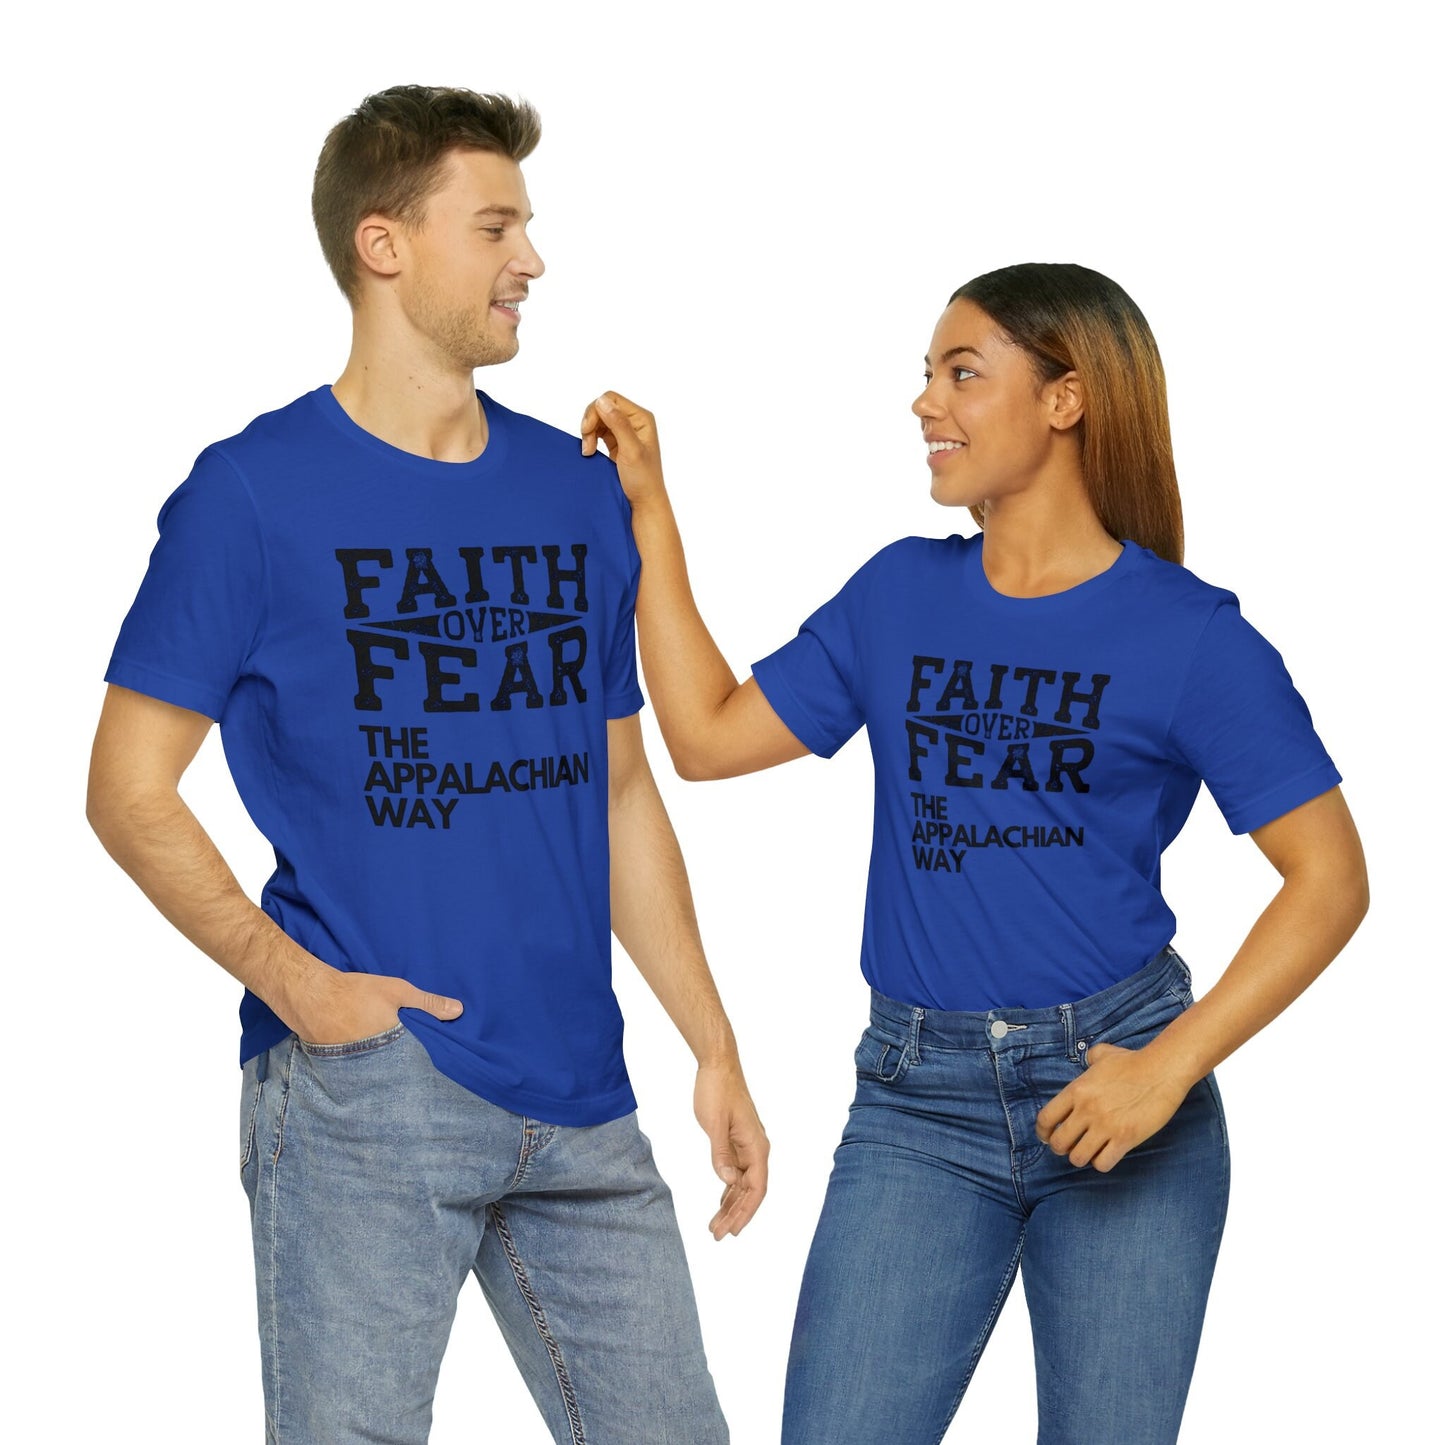 Faith Over Fear The Appalachian Way T-shirt| Christian Shirts, Faith Shirt,Inspirational Christian Shirt,Motivational Shirts, gifts for him